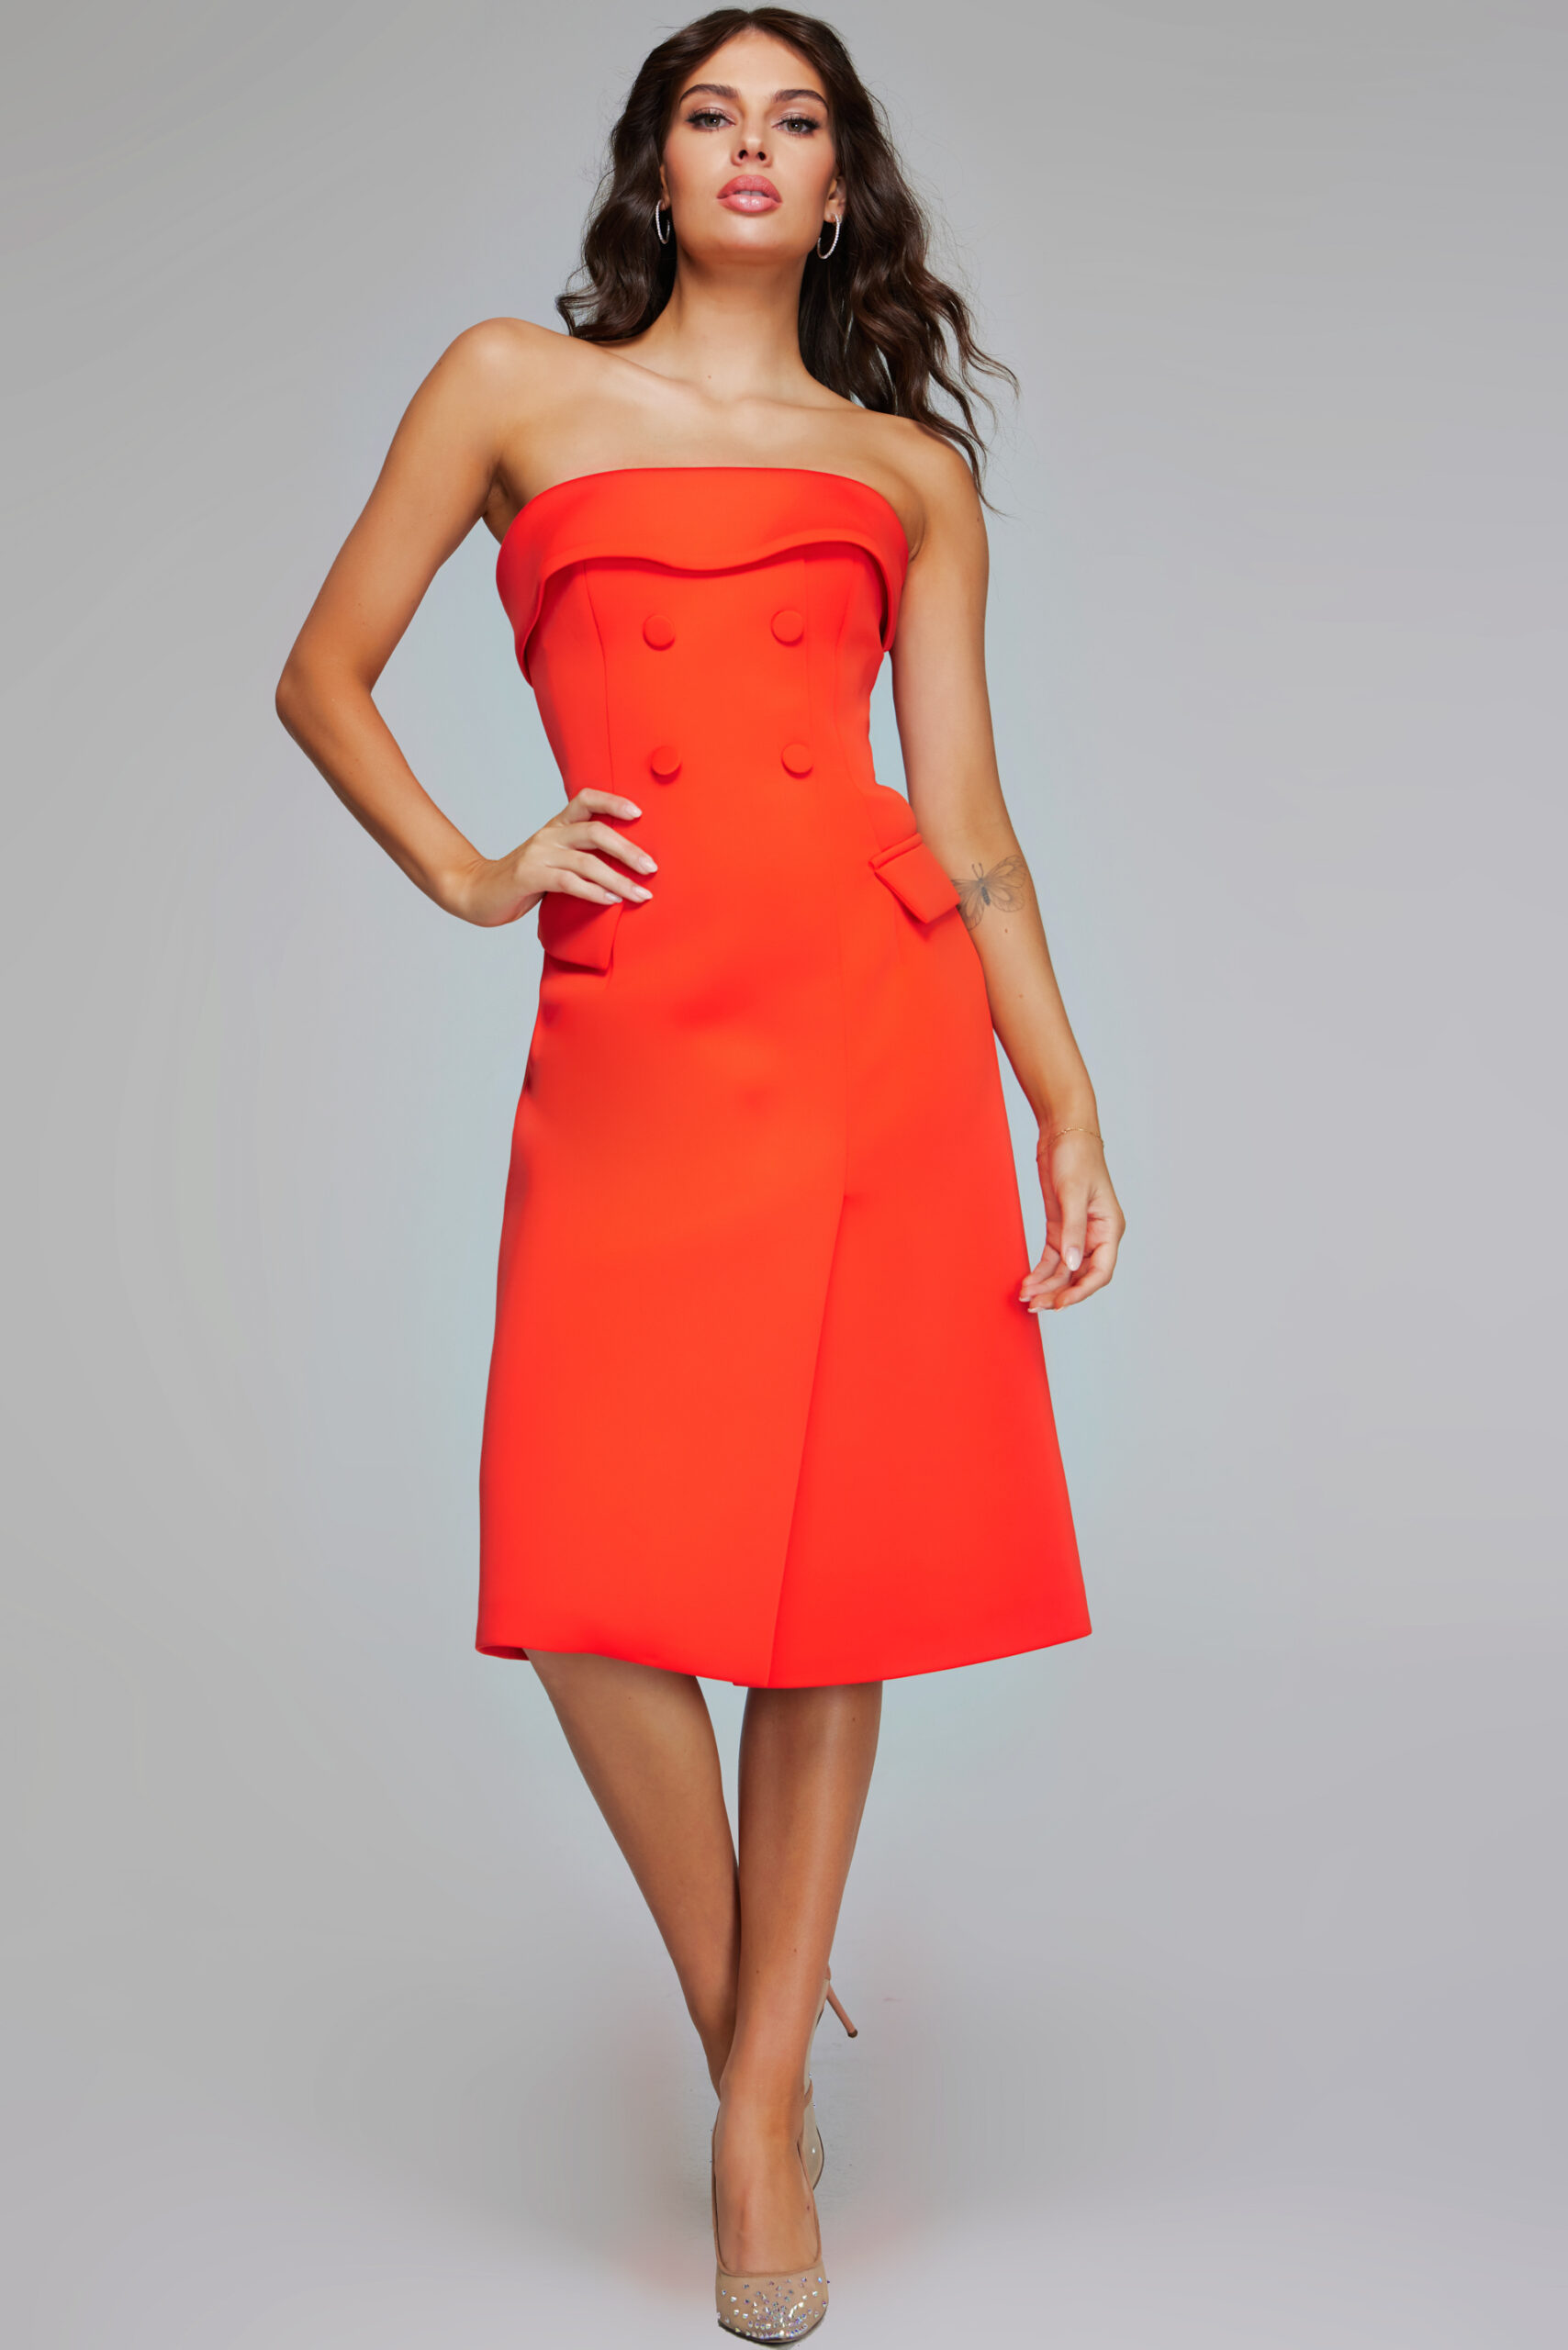 Model wearing Bold Orange Strapless Dress 39743